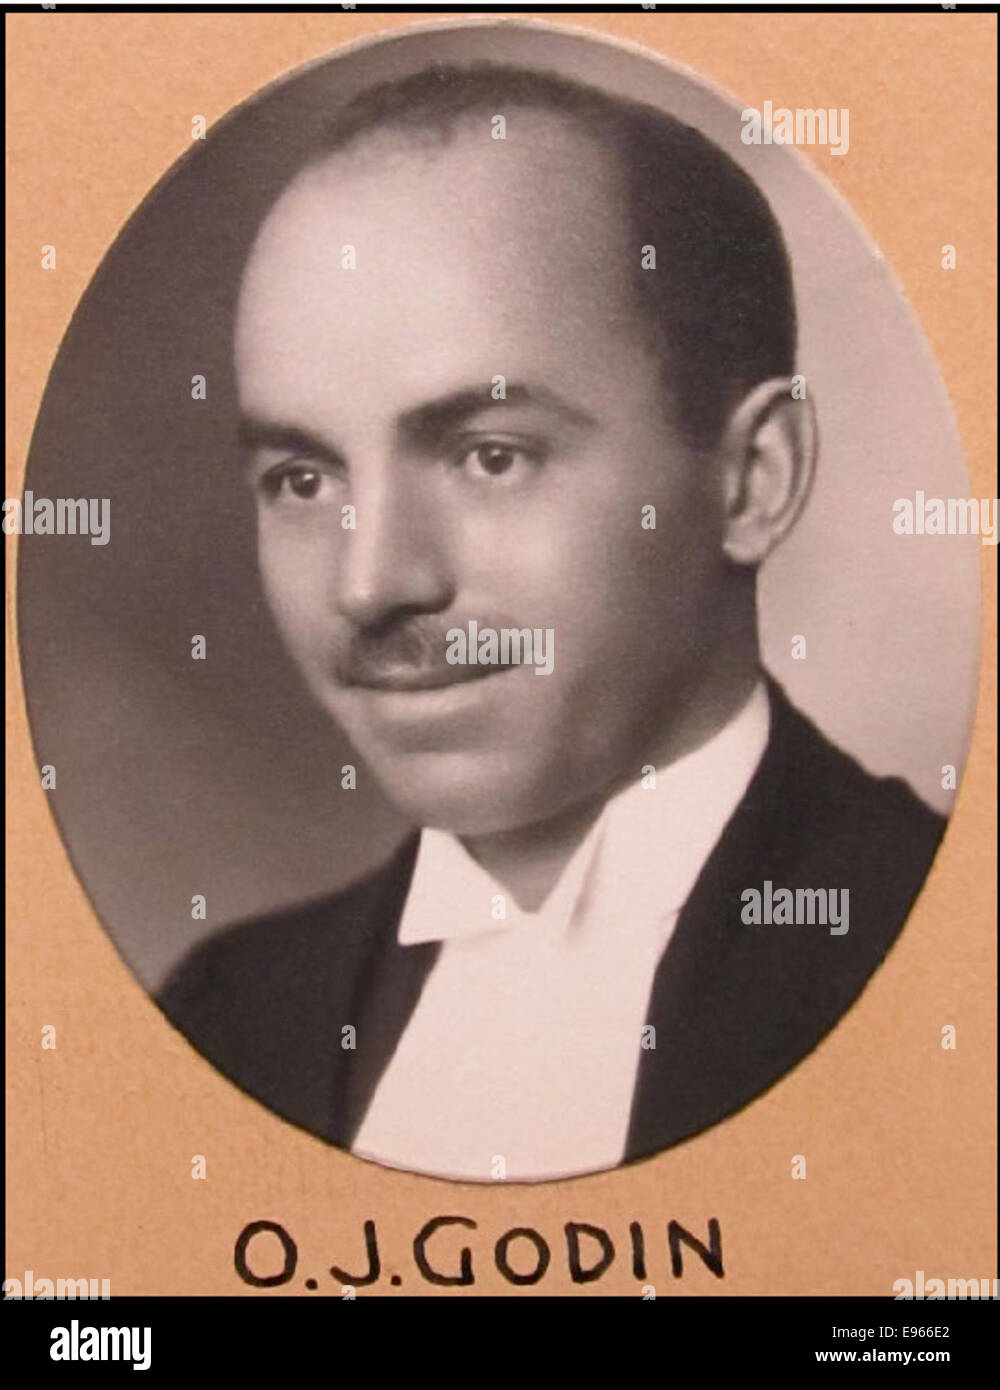 Photograph of Osias Joseph Godin (1911-1988) 14604559196 o Stock Photo - photograph-of-osias-joseph-godin-1911-1988-14604559196-o-E966E2